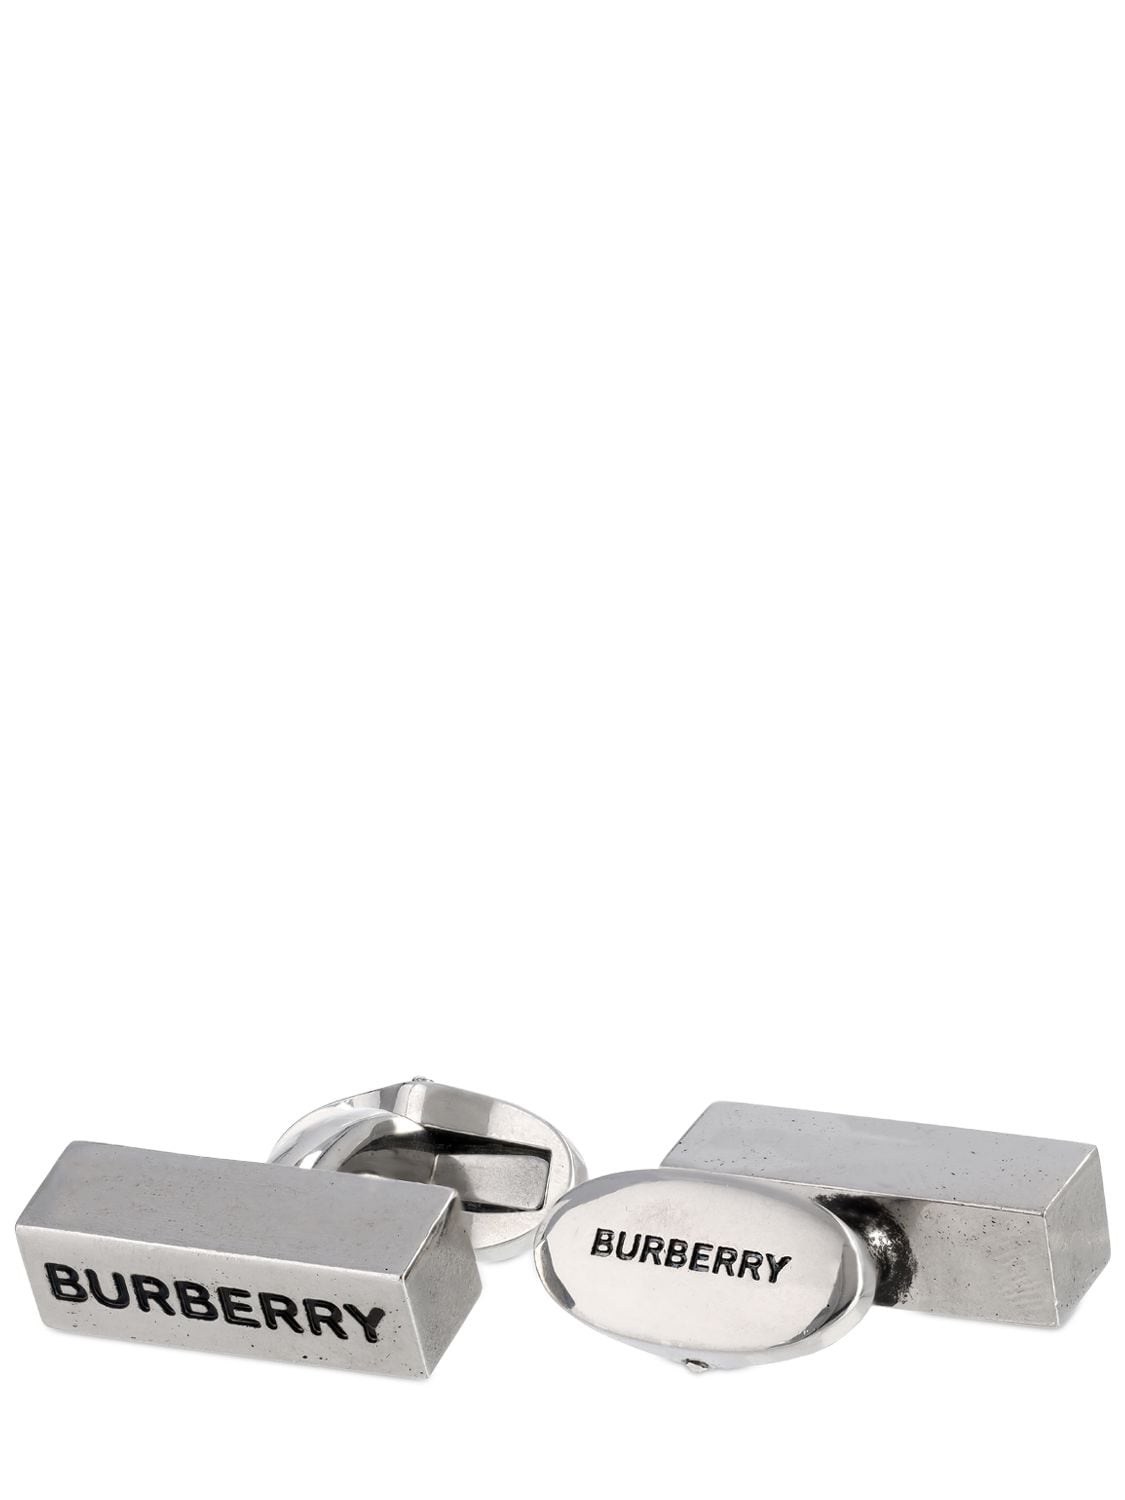 Image of Engraved Burberry Logo Cufflinks